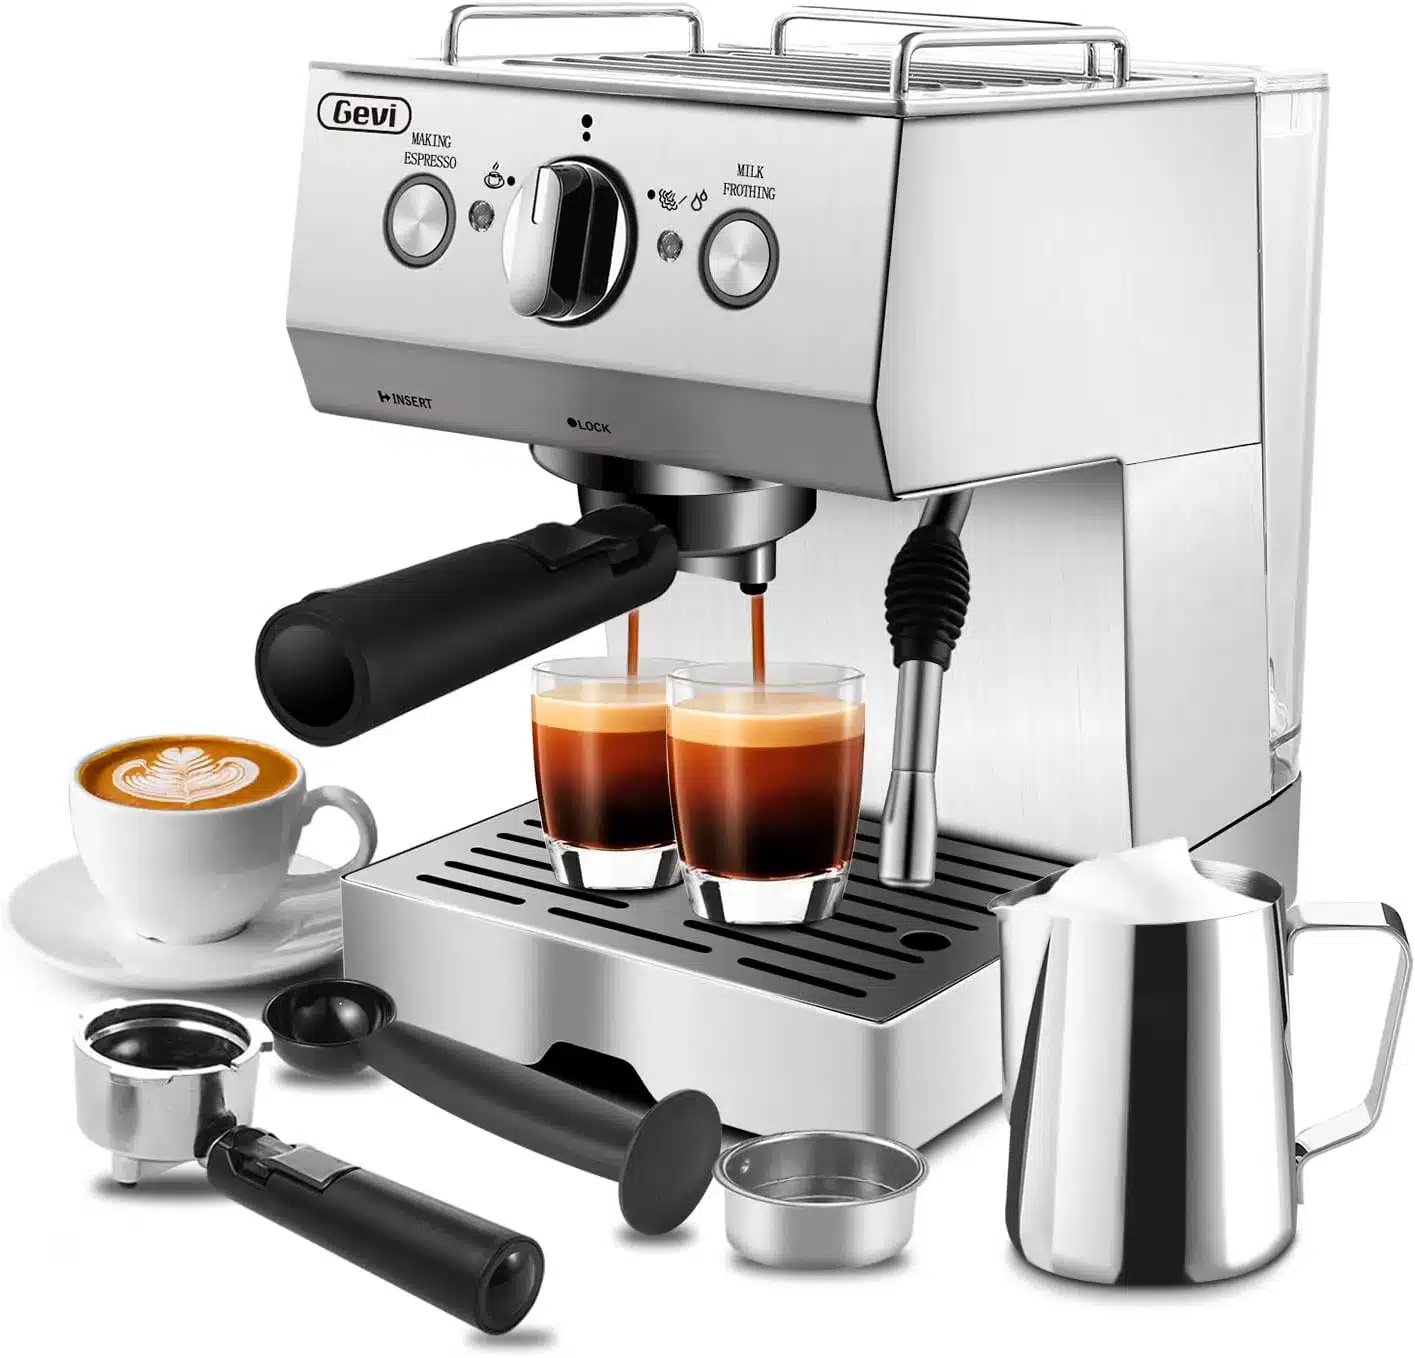 Gevi GECME003D-U Model 15 Bar Espresso Coffee Maker Machine